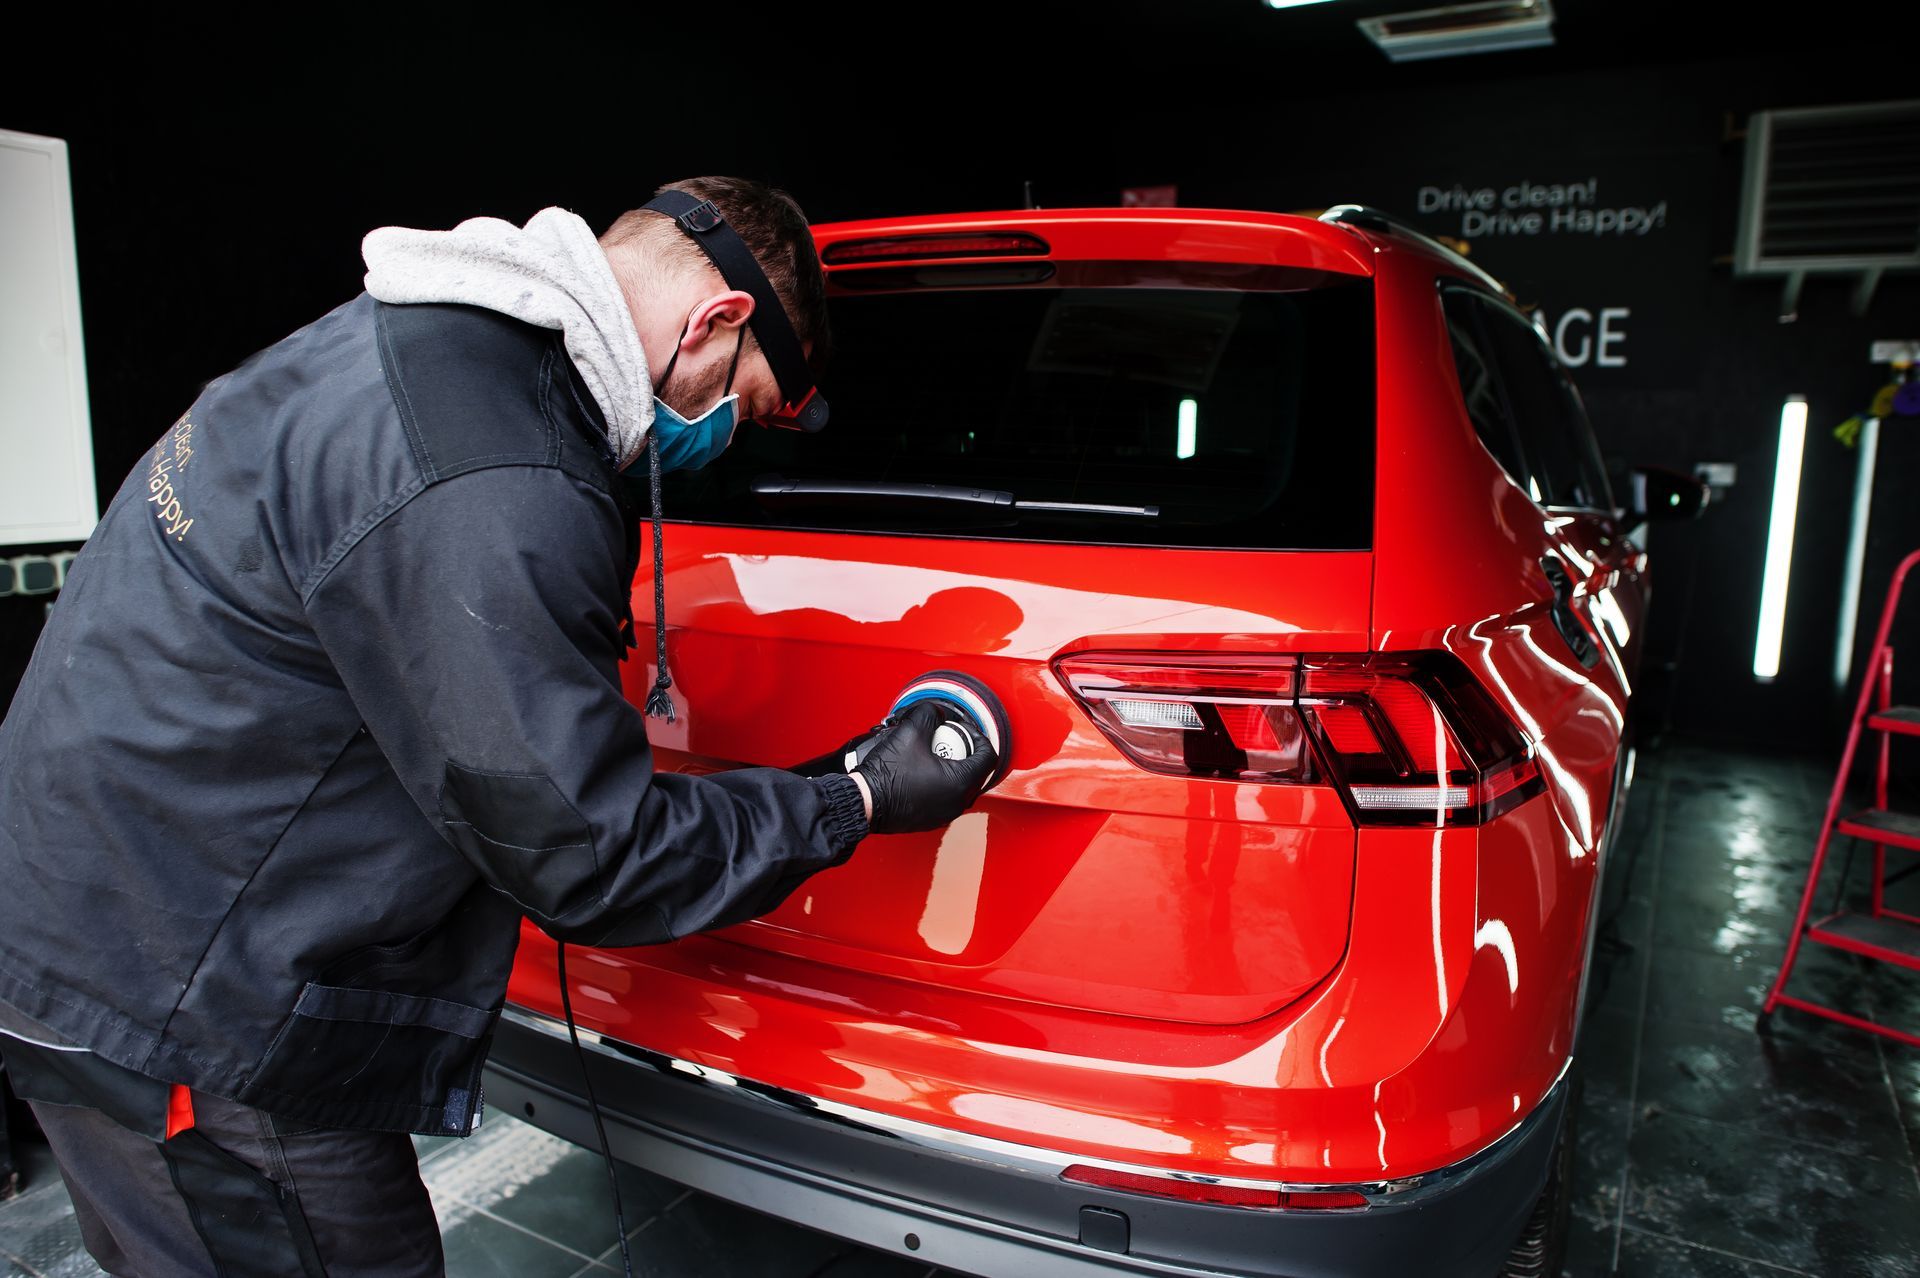 A man is polishing a red car in a garage.